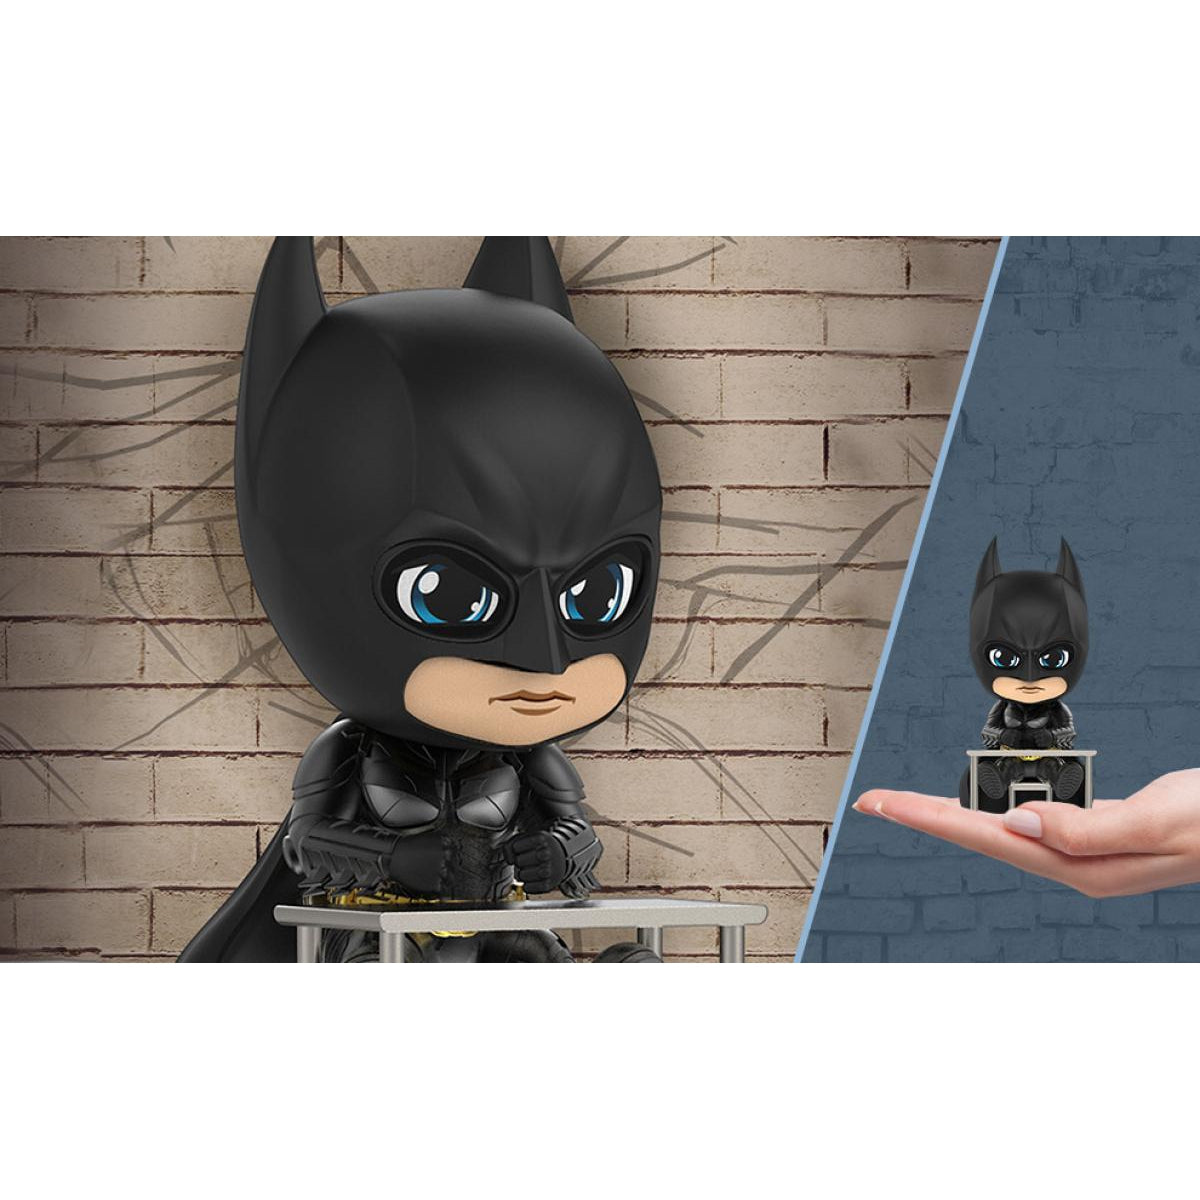 Batman (Interrogating Version) Cosbaby (Dark Knight)